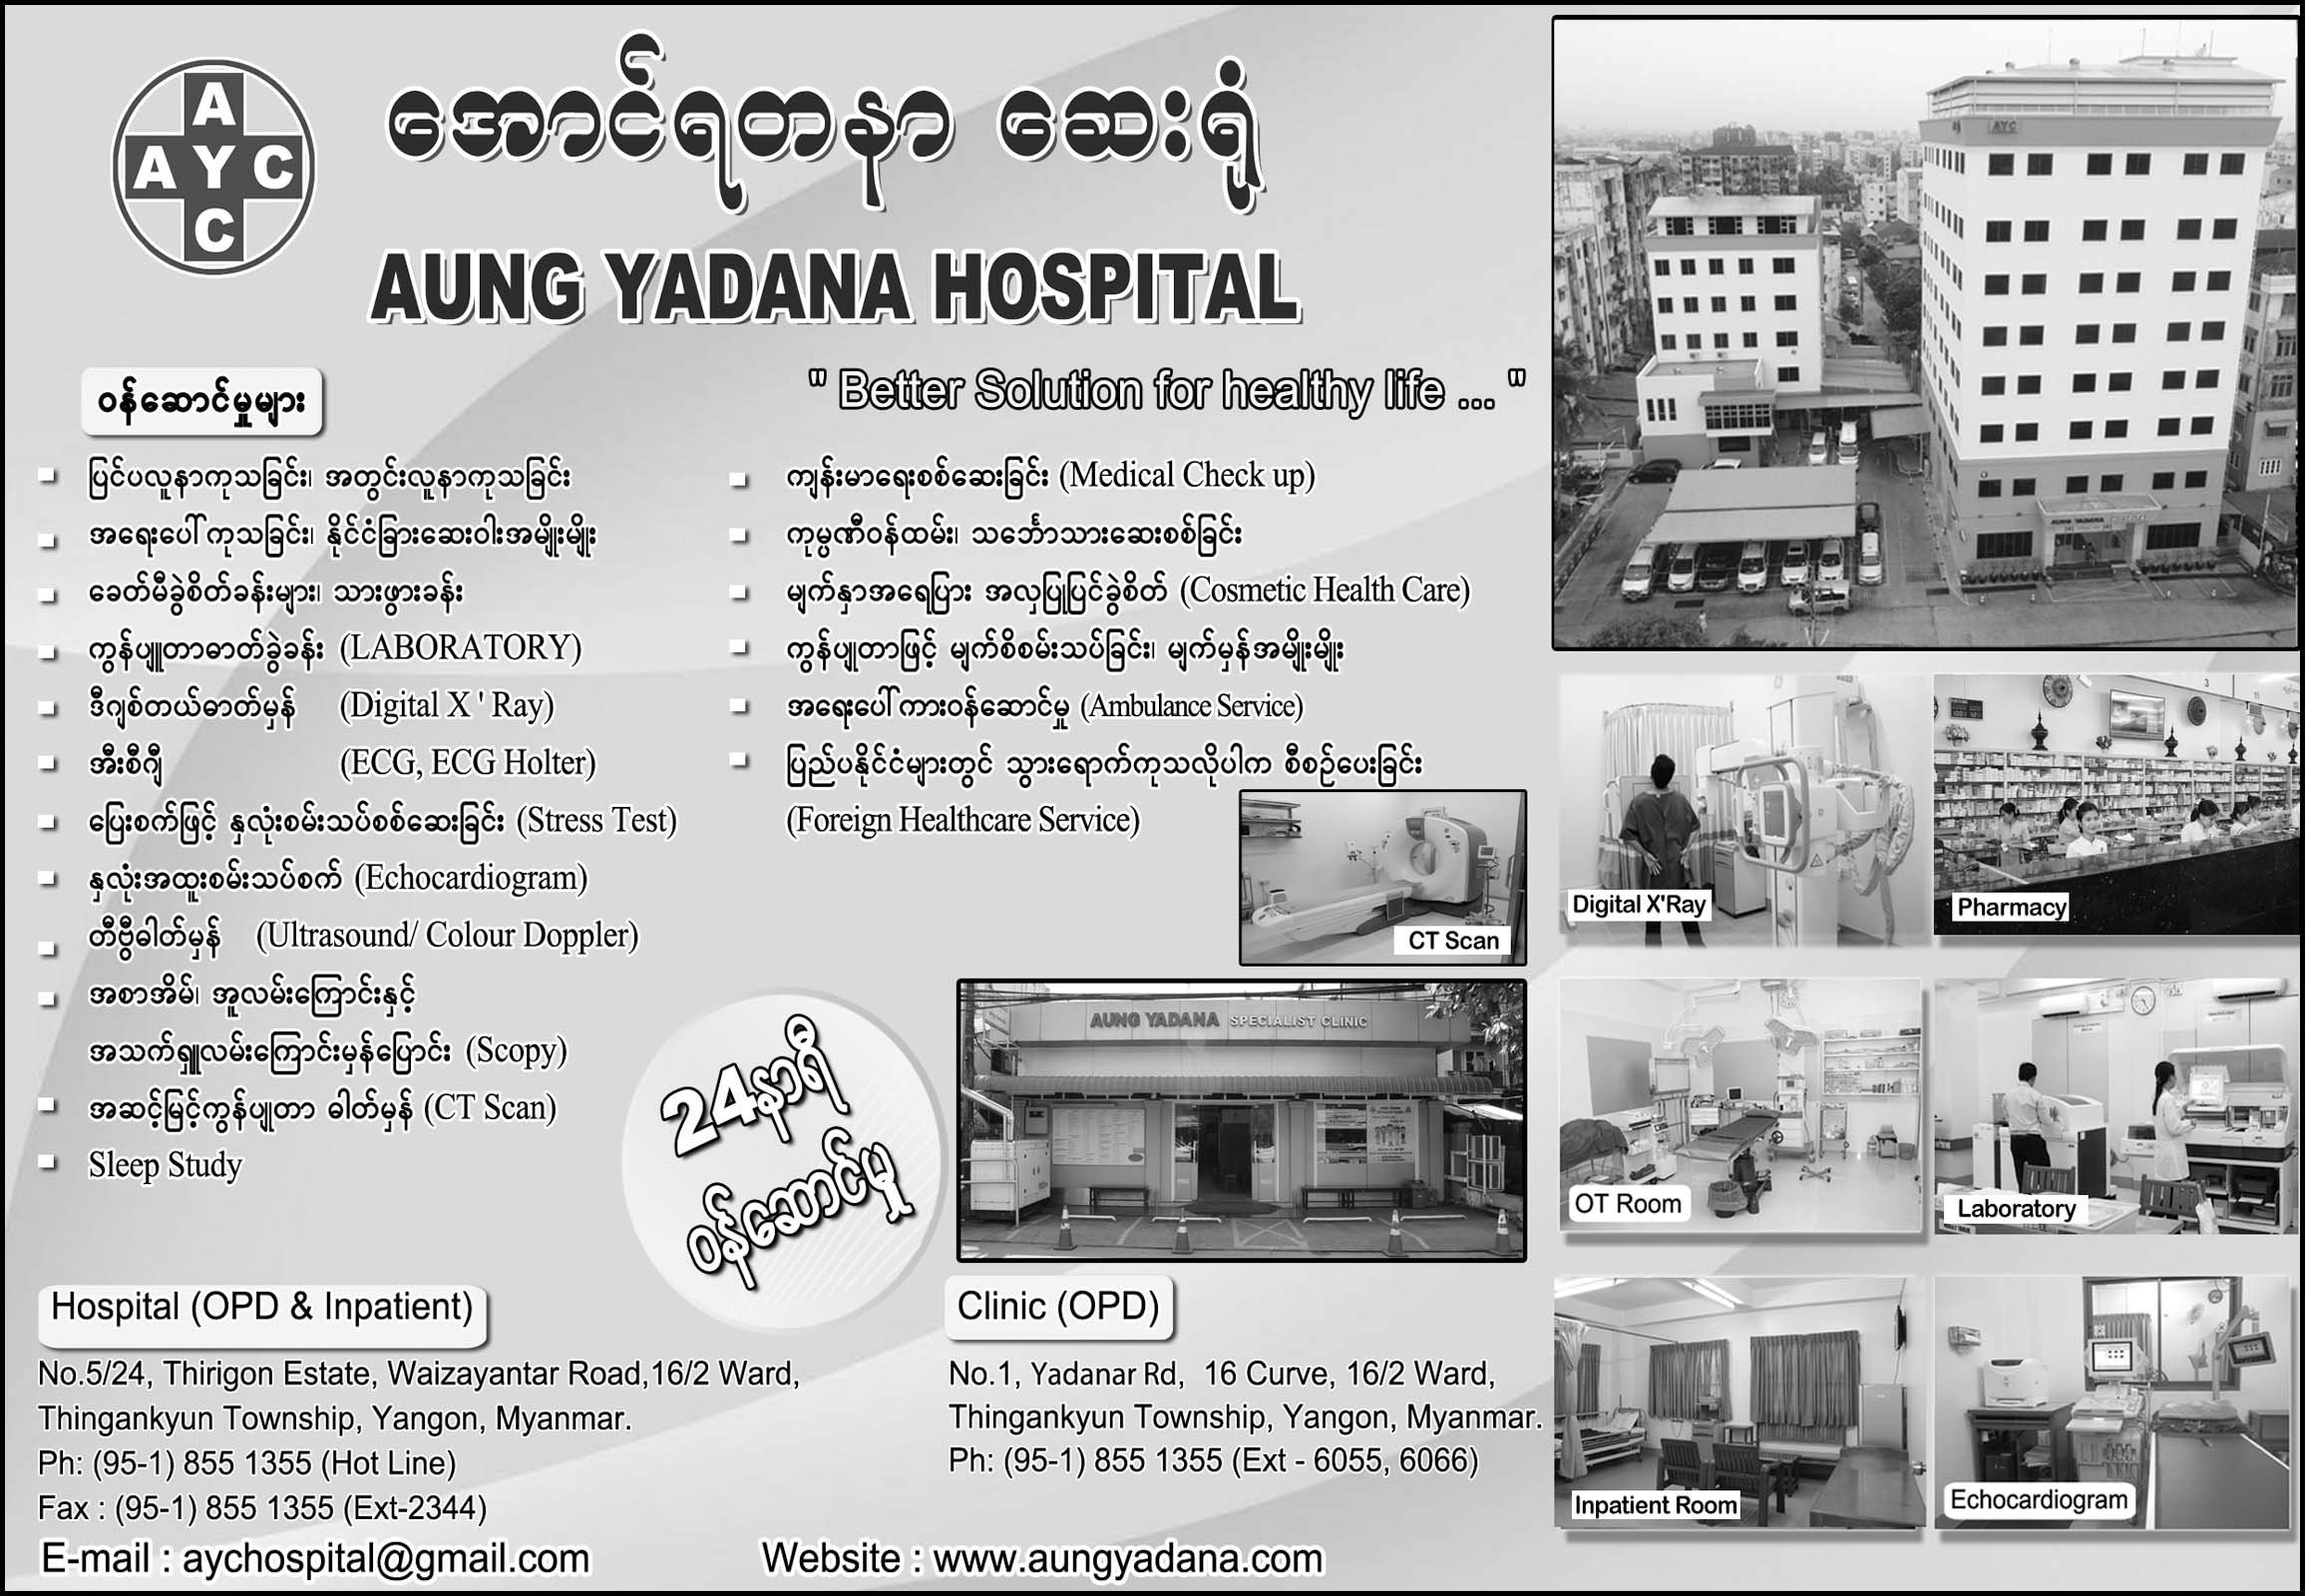 Aung Yadana Hospital